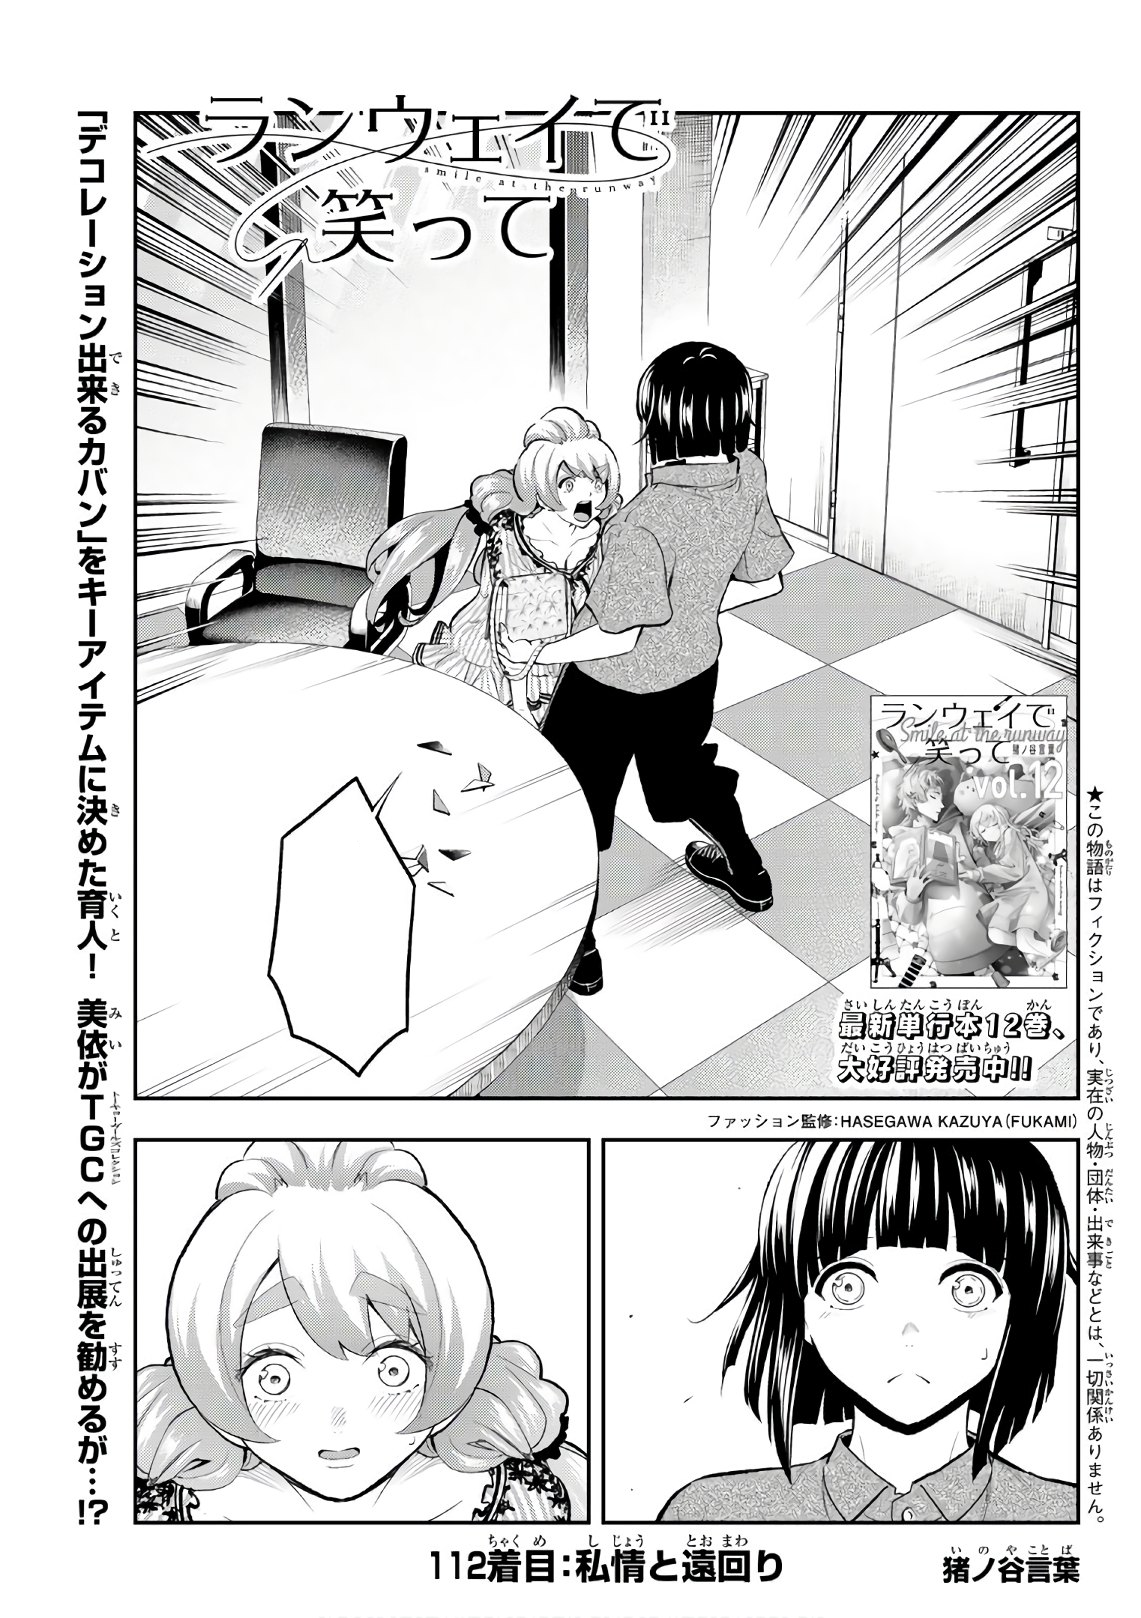 Smile at the Runway (Runway de Waratte) Manga